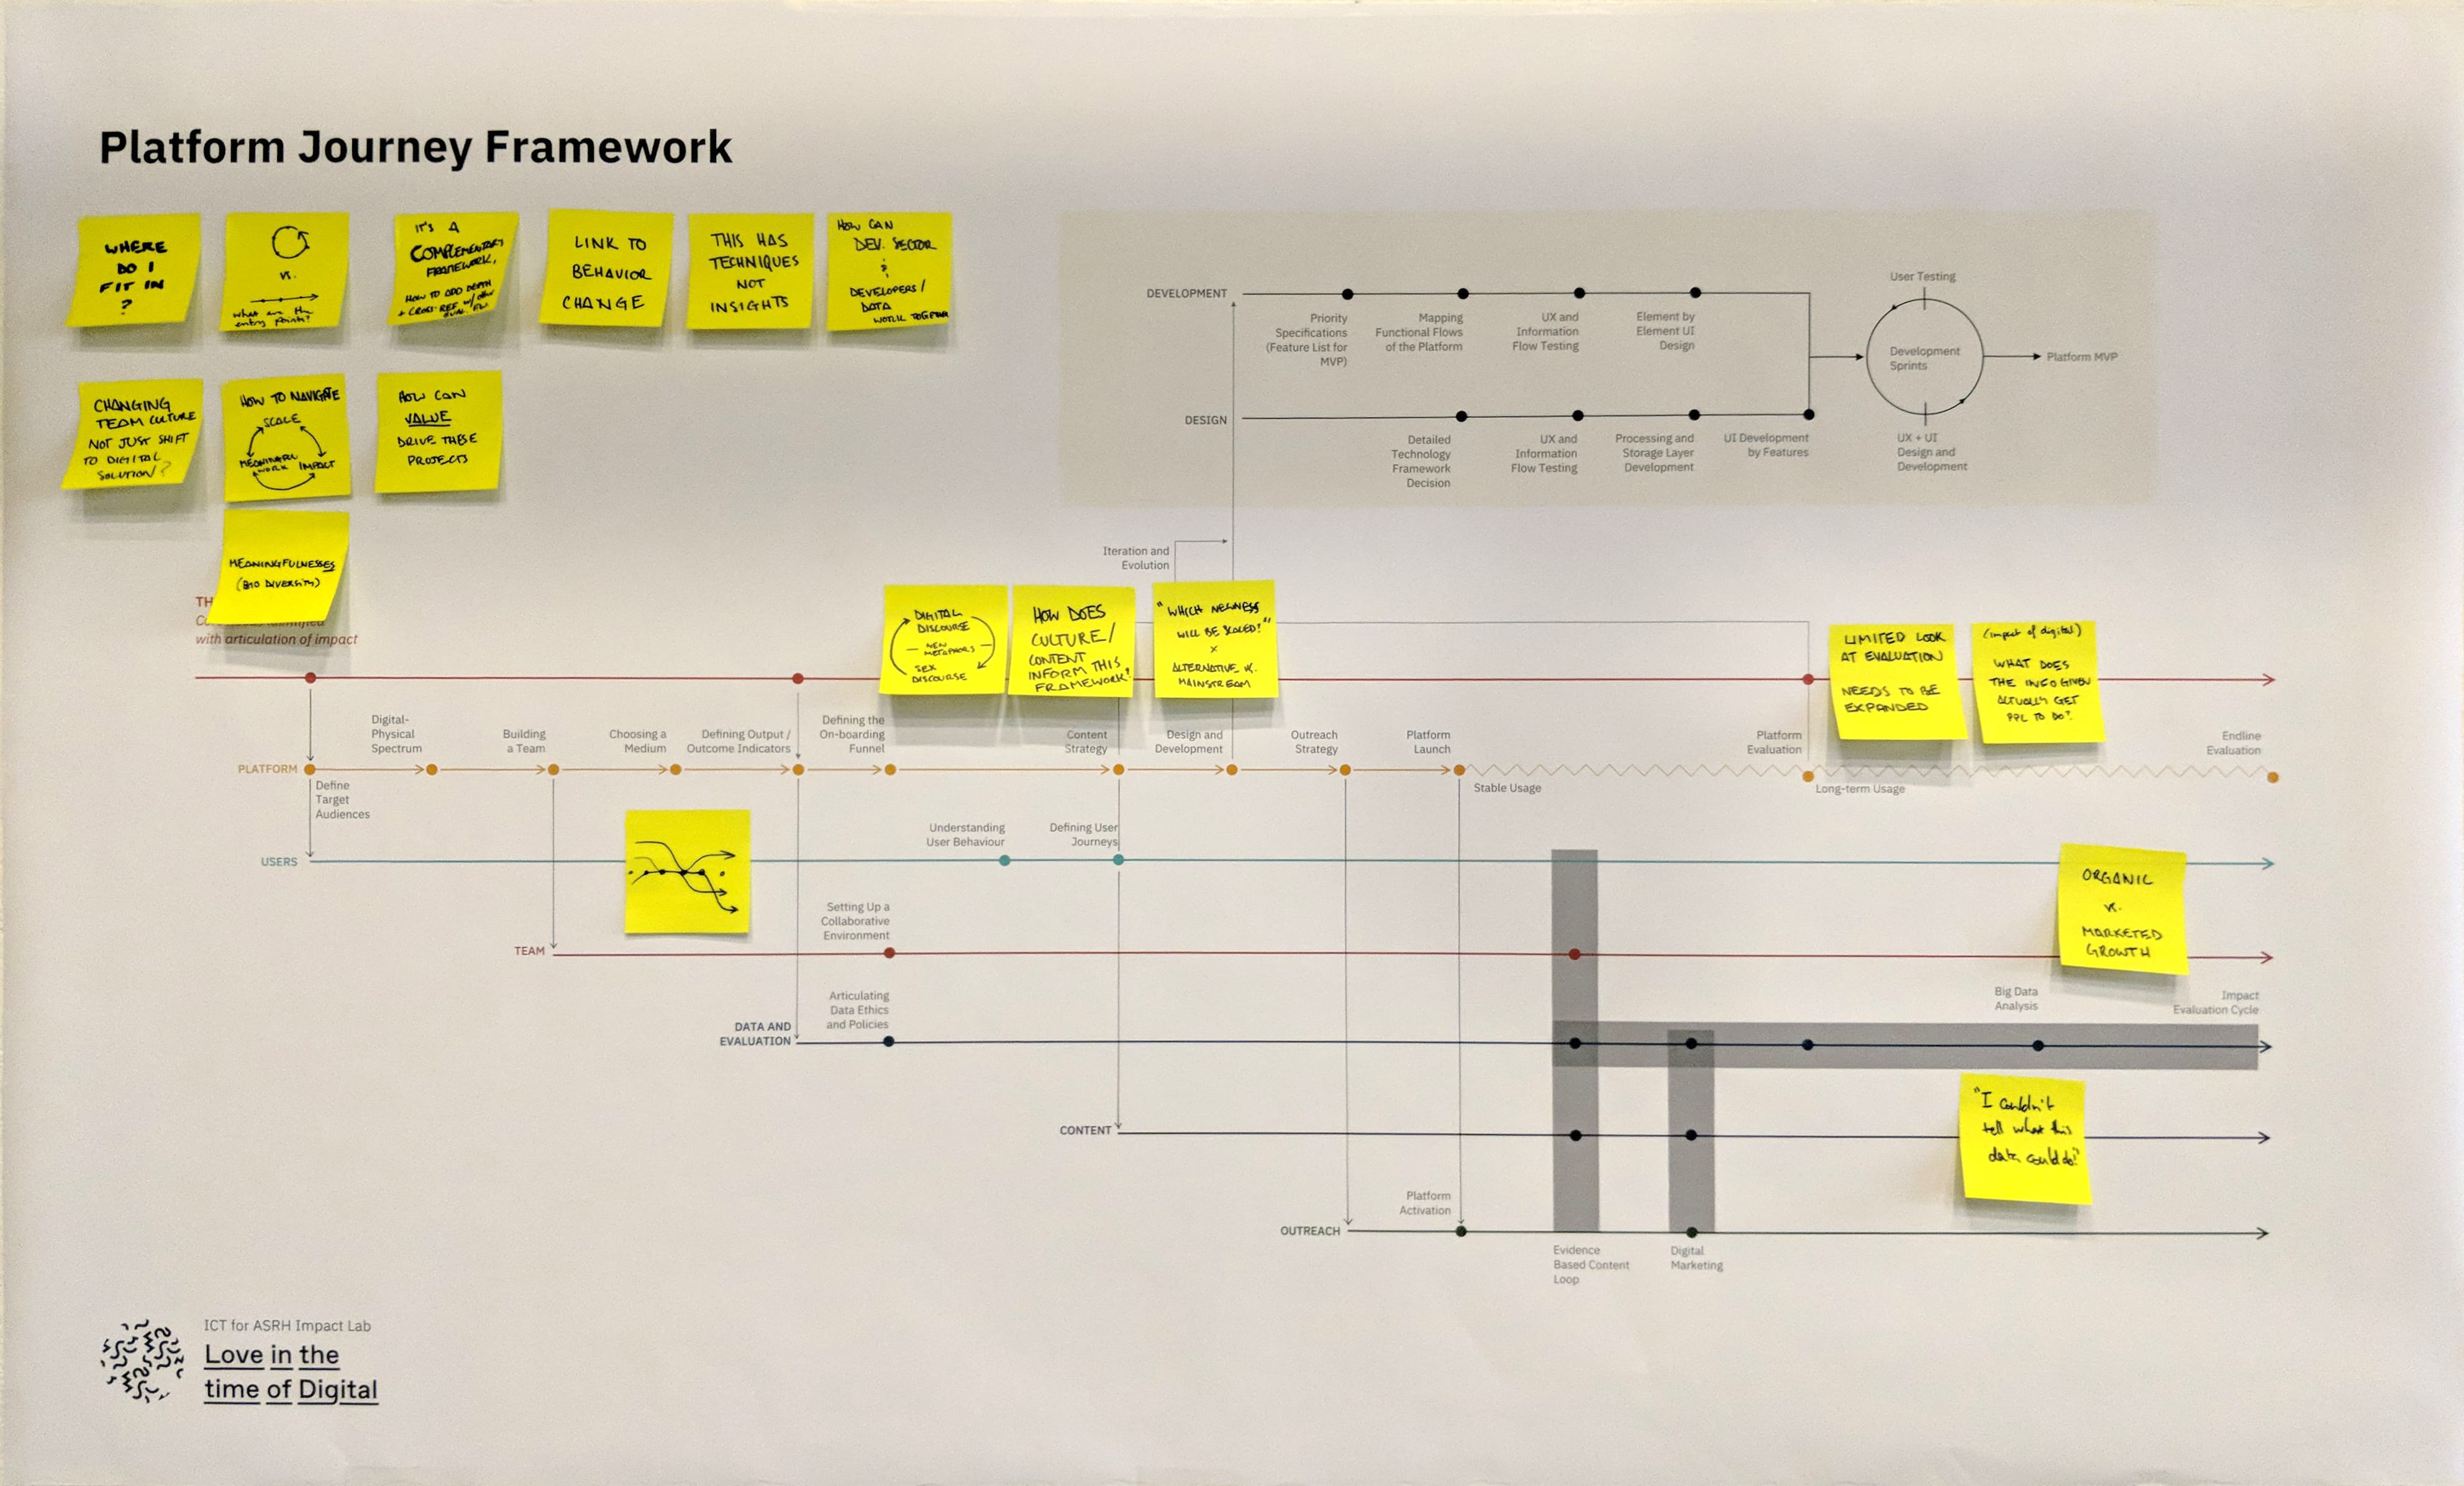 Draft of the Platform Journey Framework